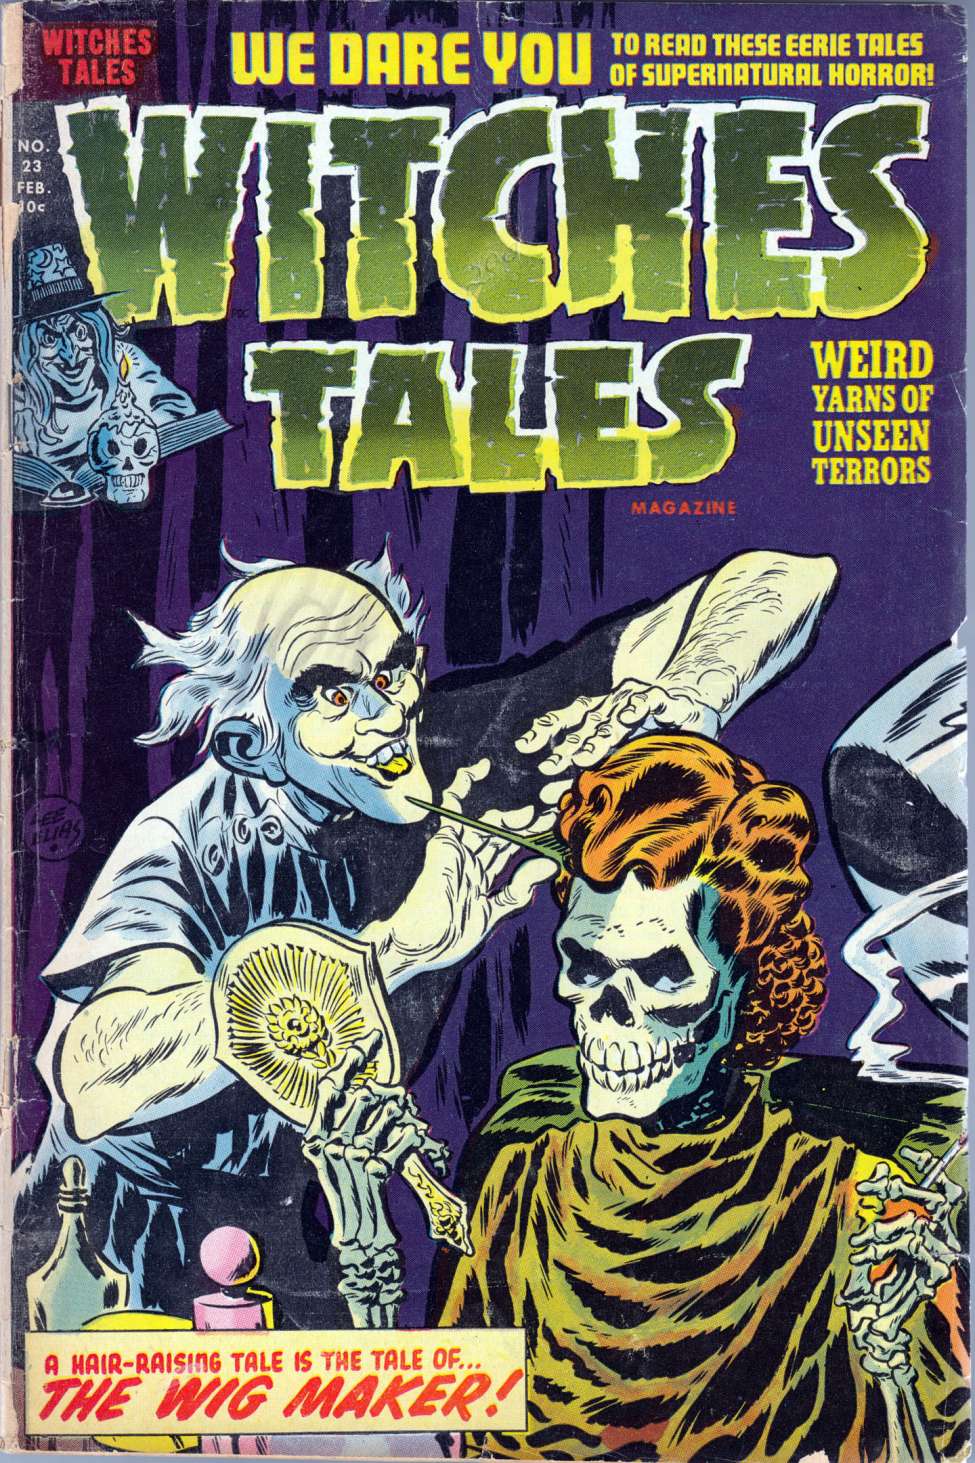 Witches Tales 23 (Harvey Comics) - Comic Book Plus